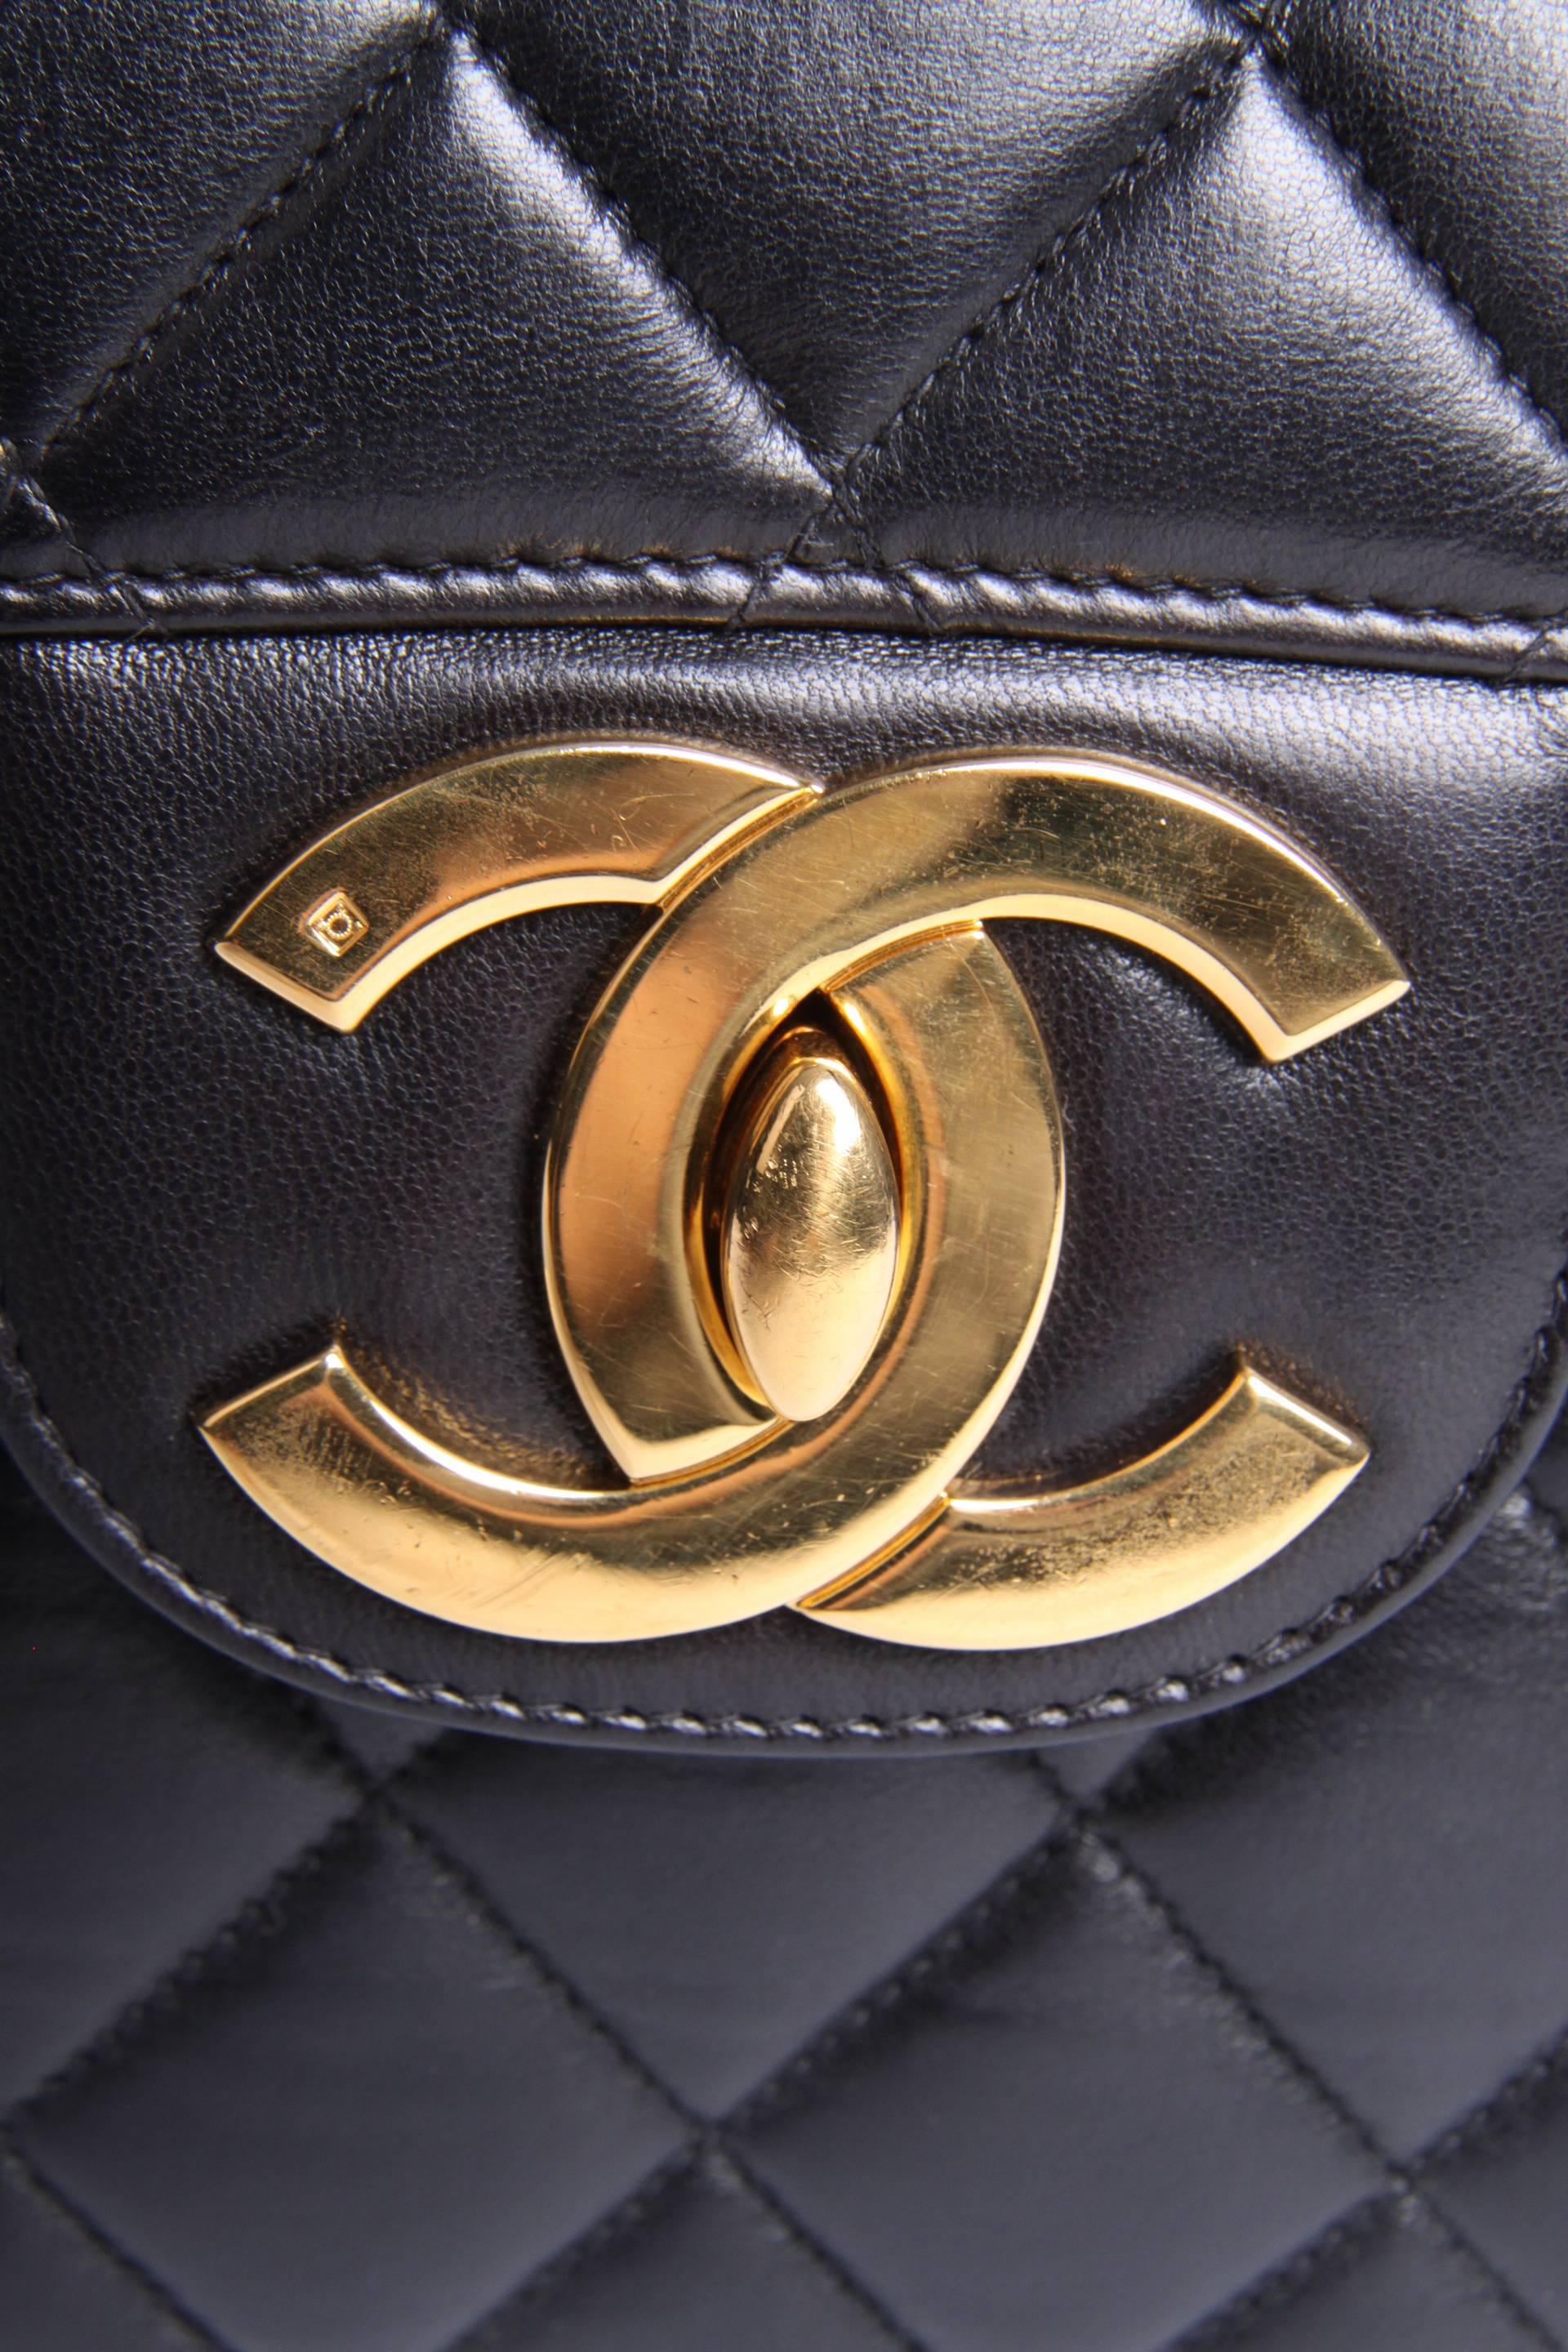  Chanel 2.55 Timeless Jumbo Flap Bag - black leather 1997 4